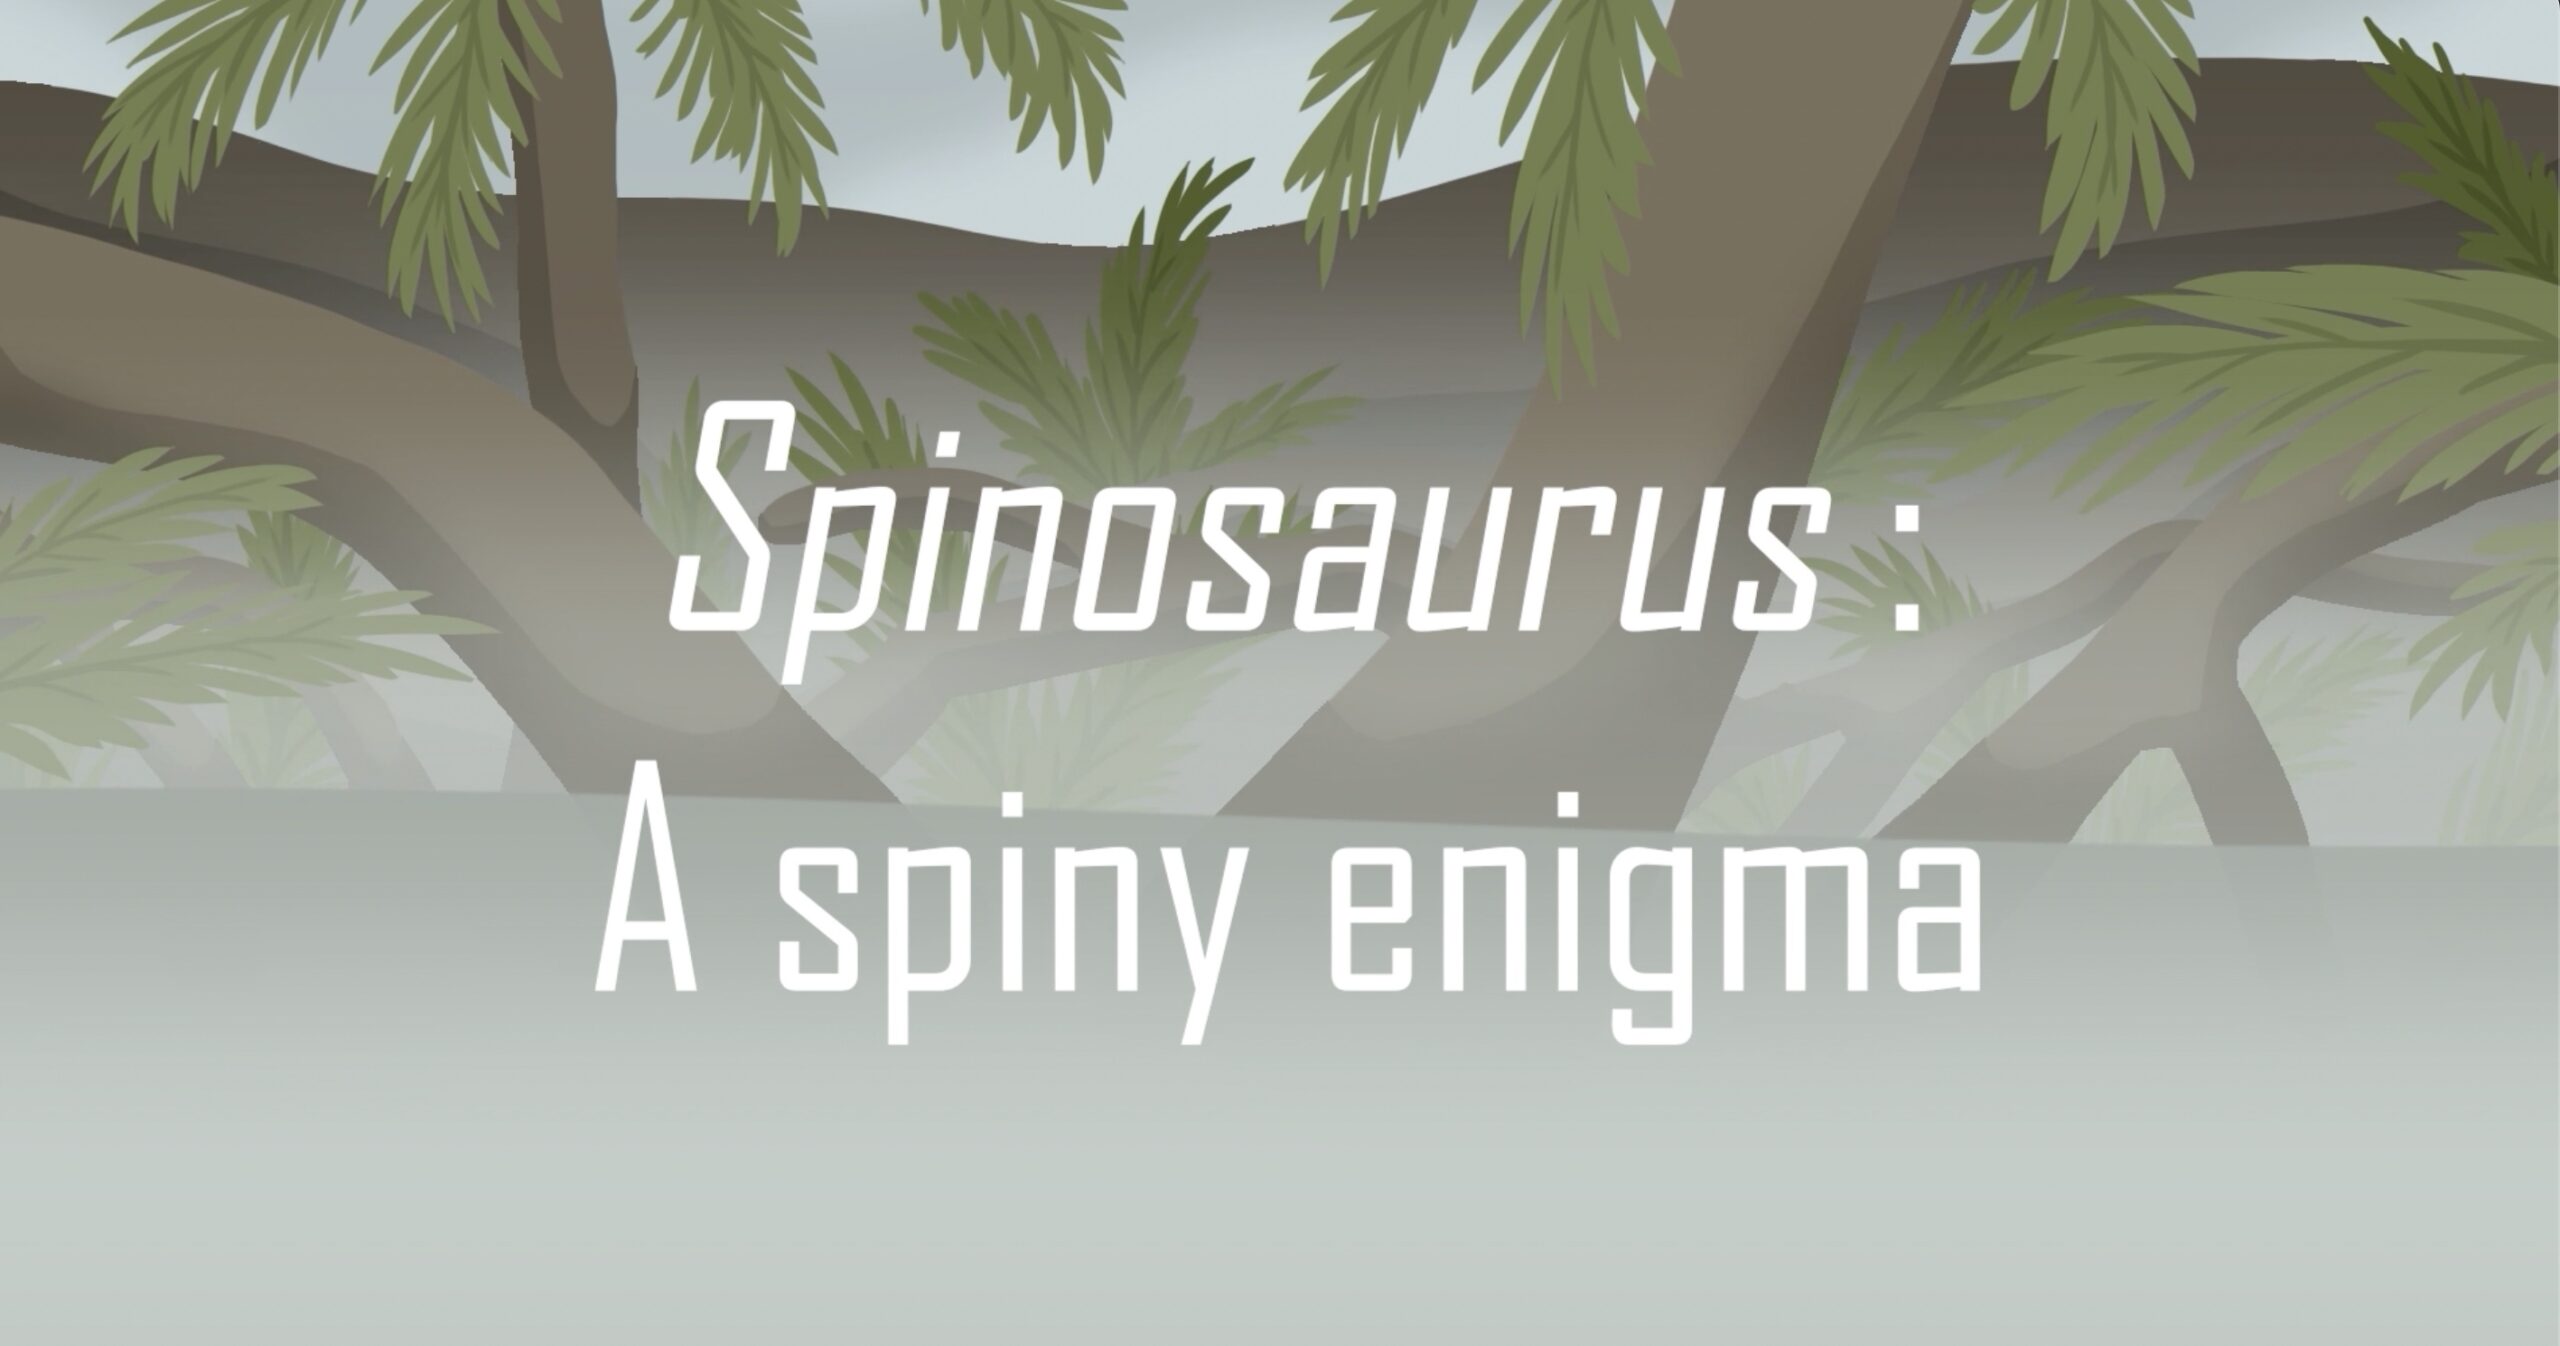 Court métrage “Spinosaurus, a spiny enigma” - LGLTPE